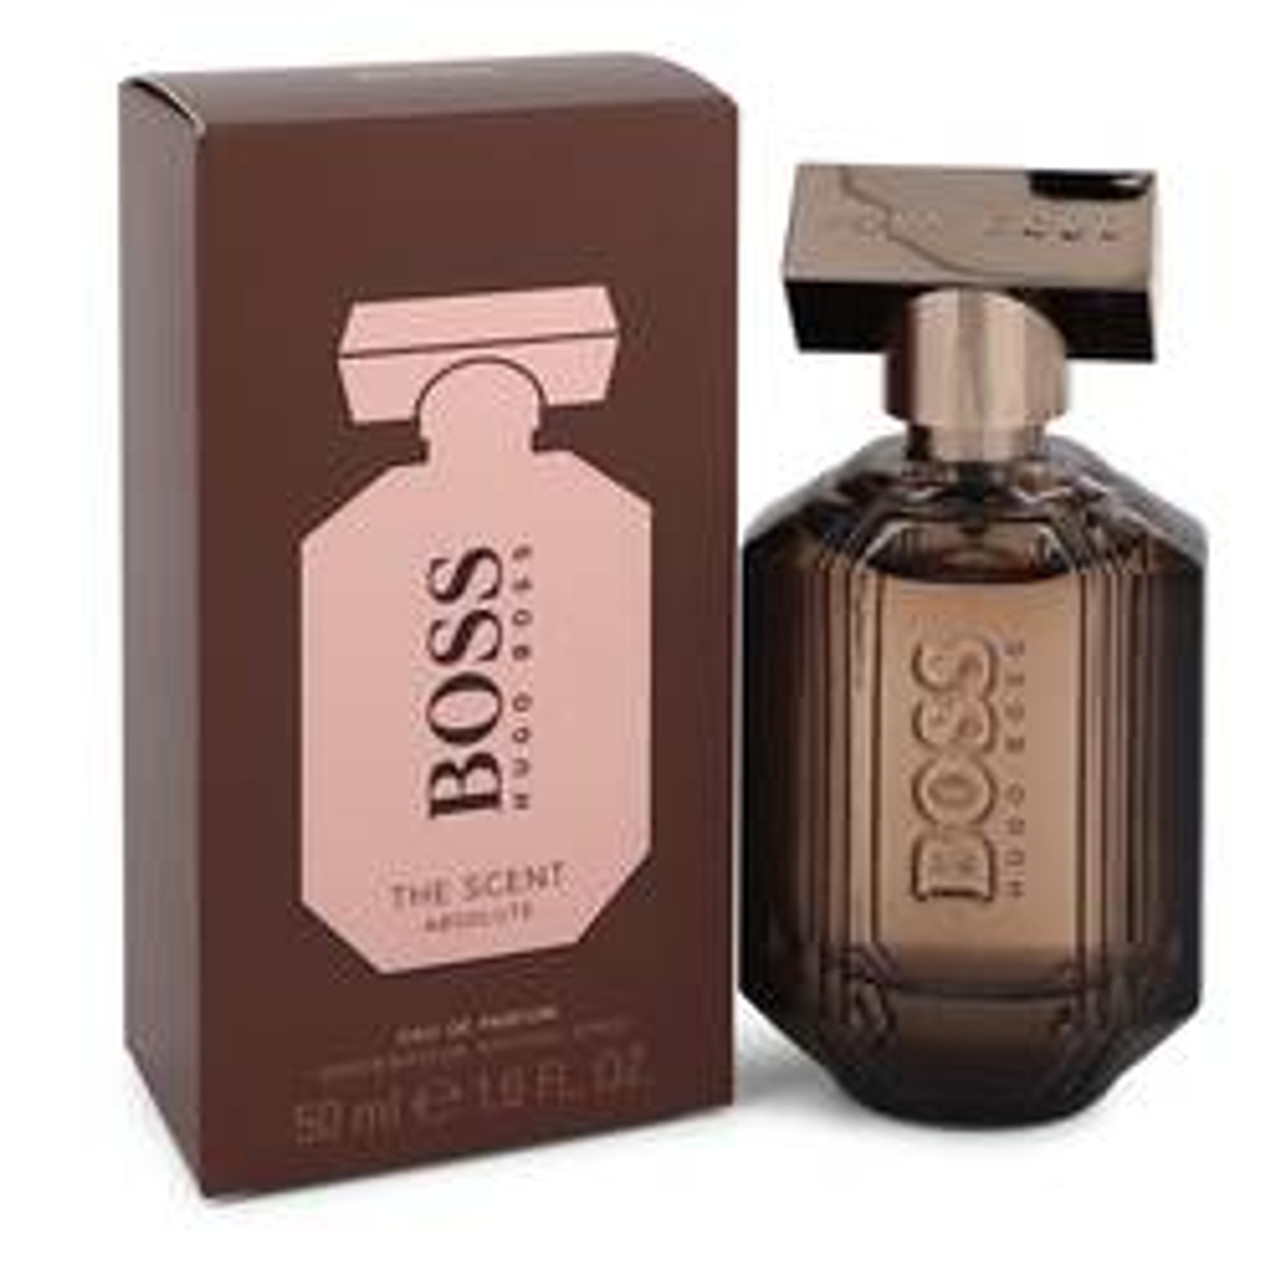 Boss The Scent Absolute Perfume By Hugo Boss Eau De Parfum Spray 1.6 oz for Women - *Pre-Order